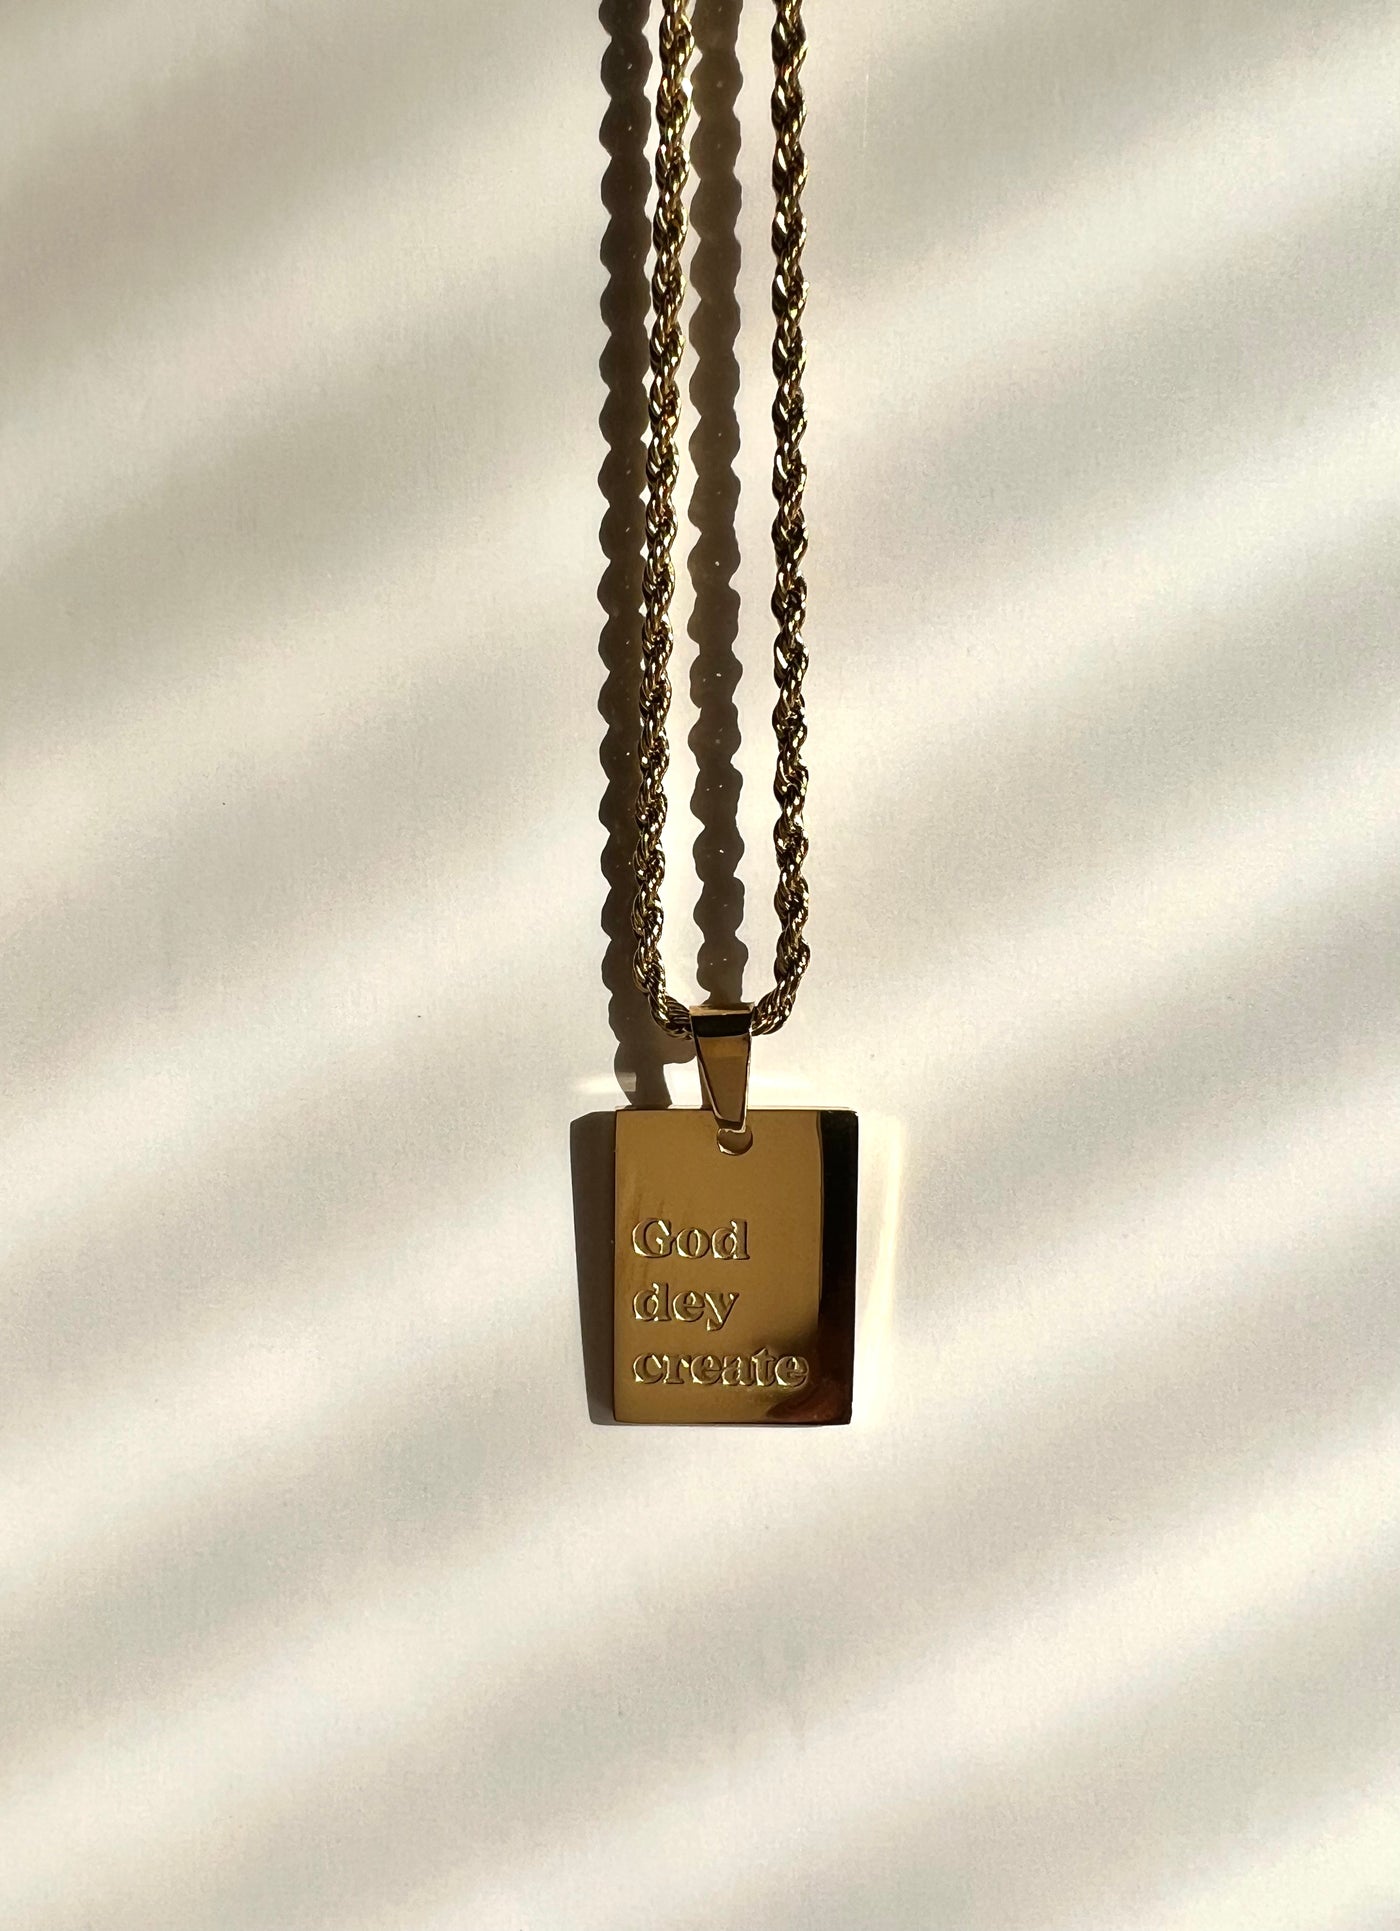 "God dey Create" Necklace (Pre-sale only)